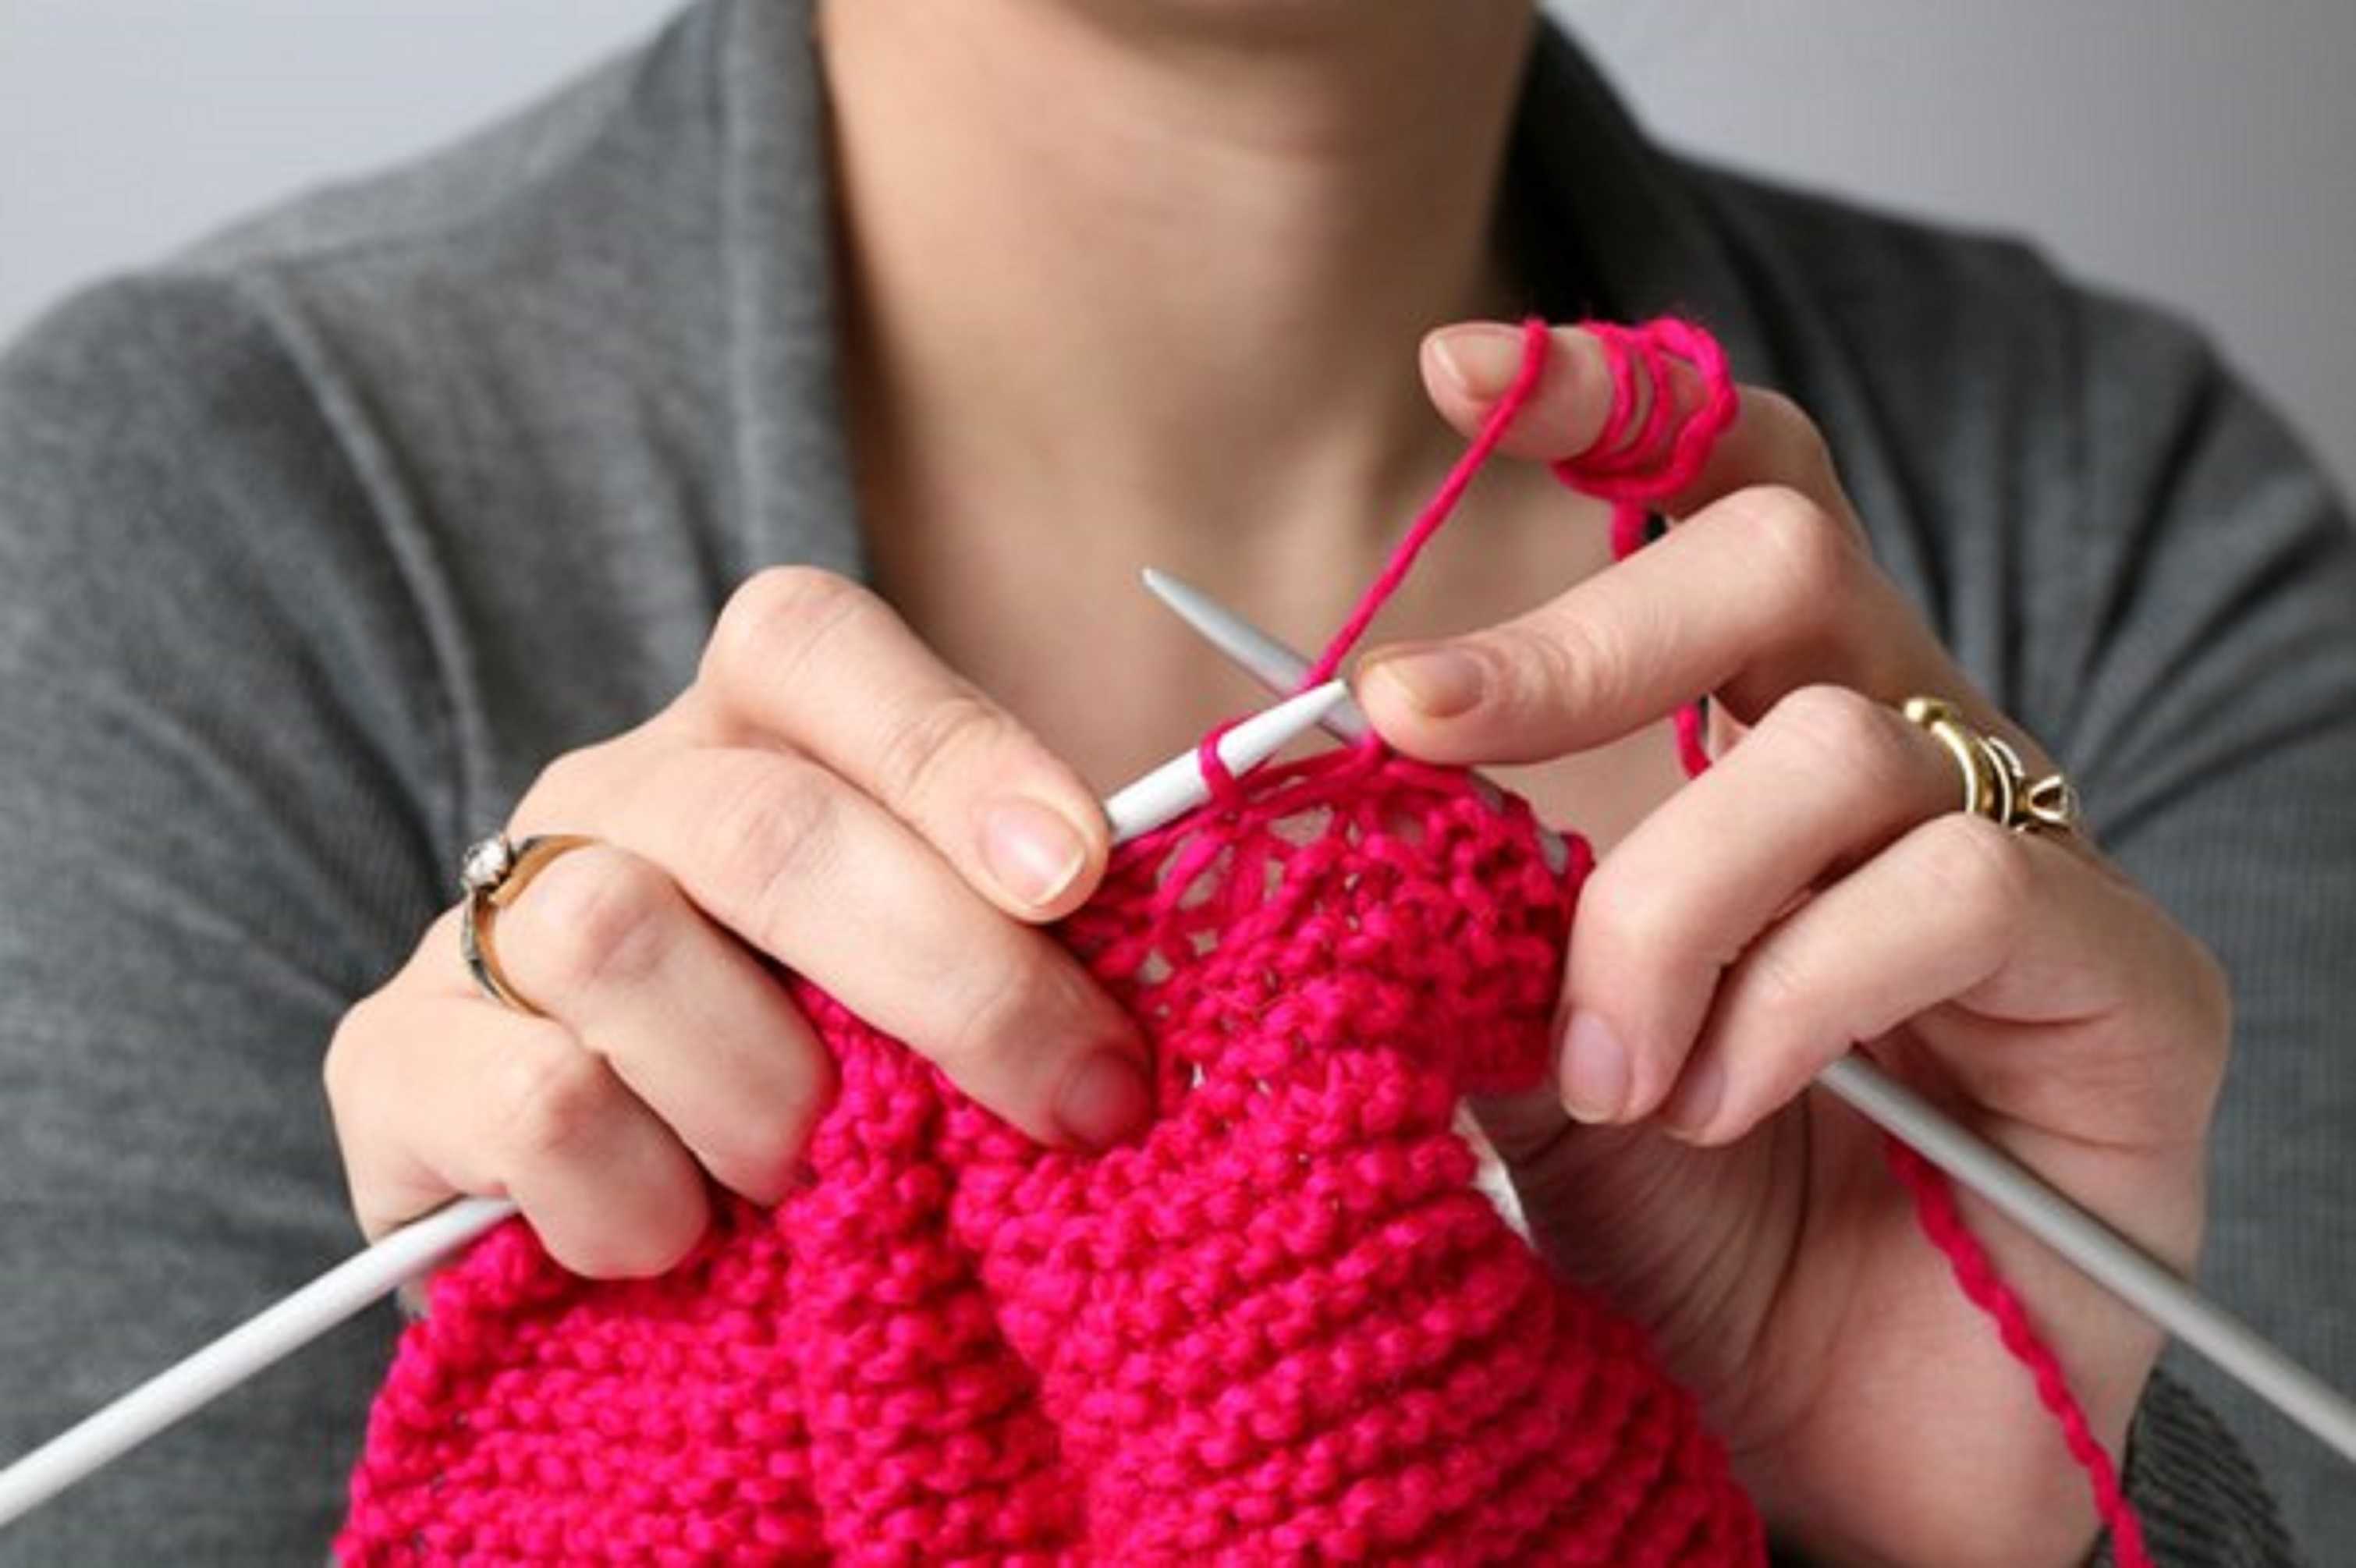 Knitting hands. Вязание. Вязание на спицах и крючком. Спицы и пряжа. Хобби вязание.